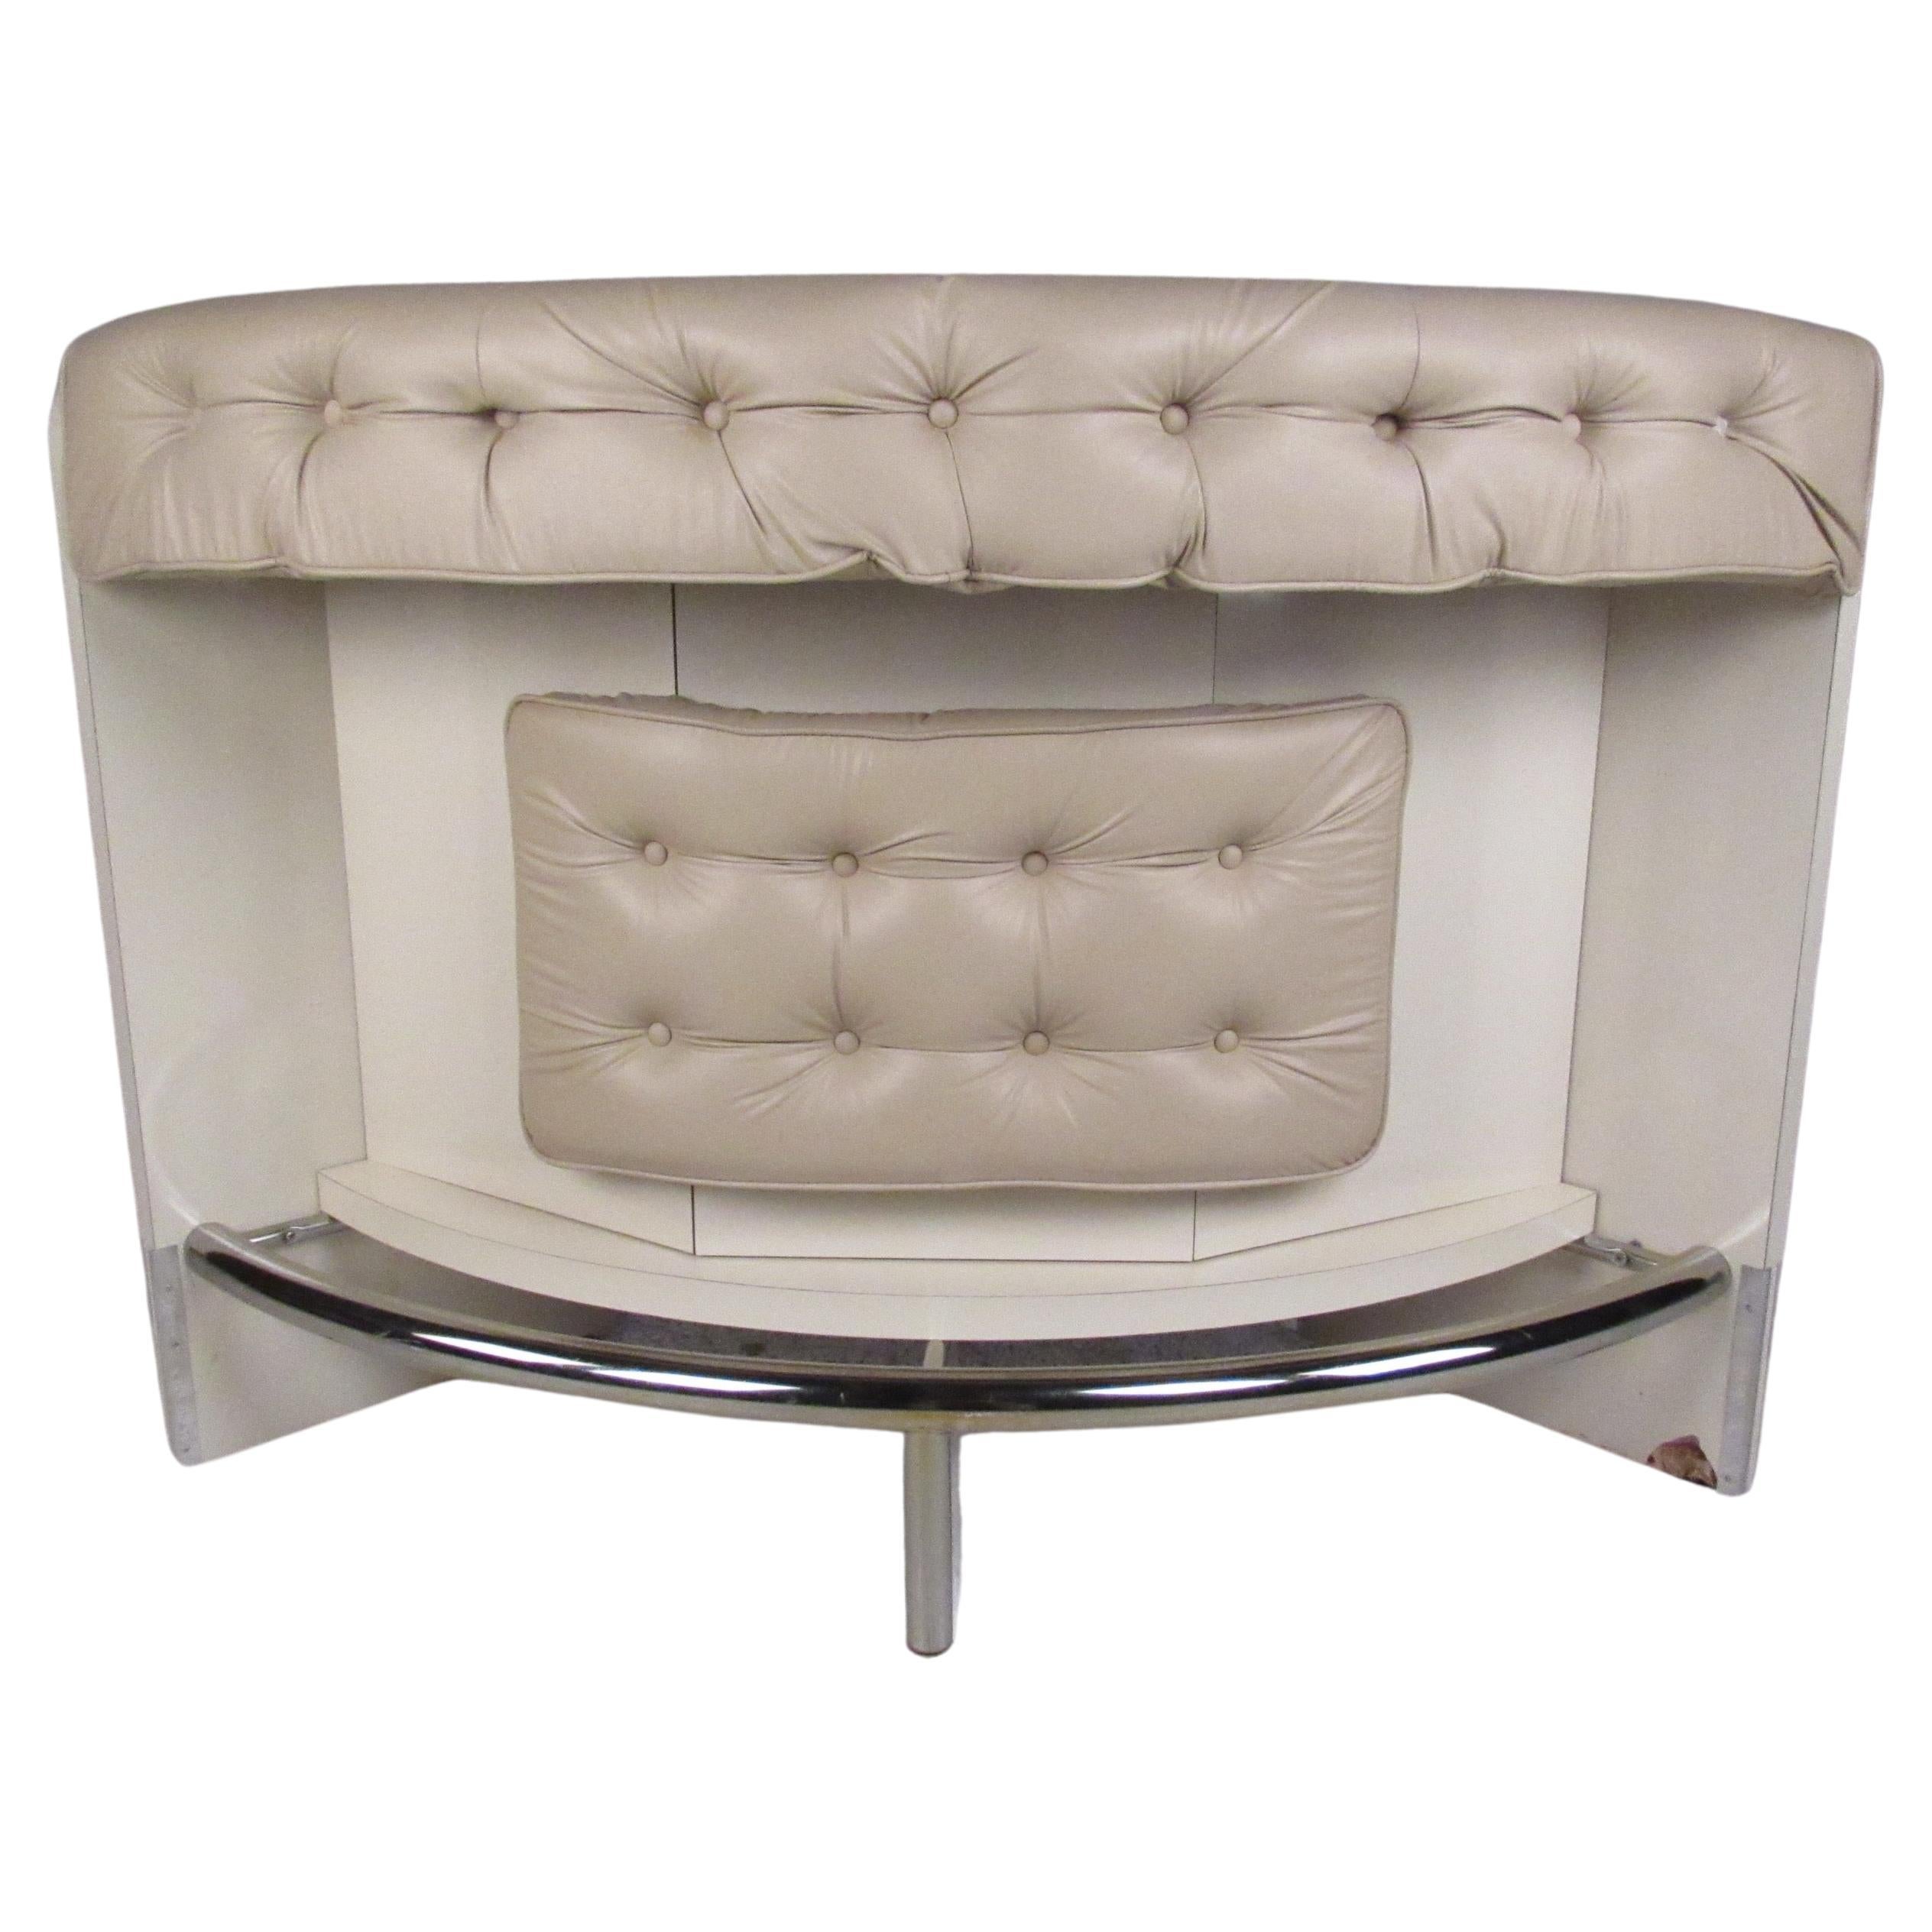 Contemporary Modern Upholstered Dry Bar 